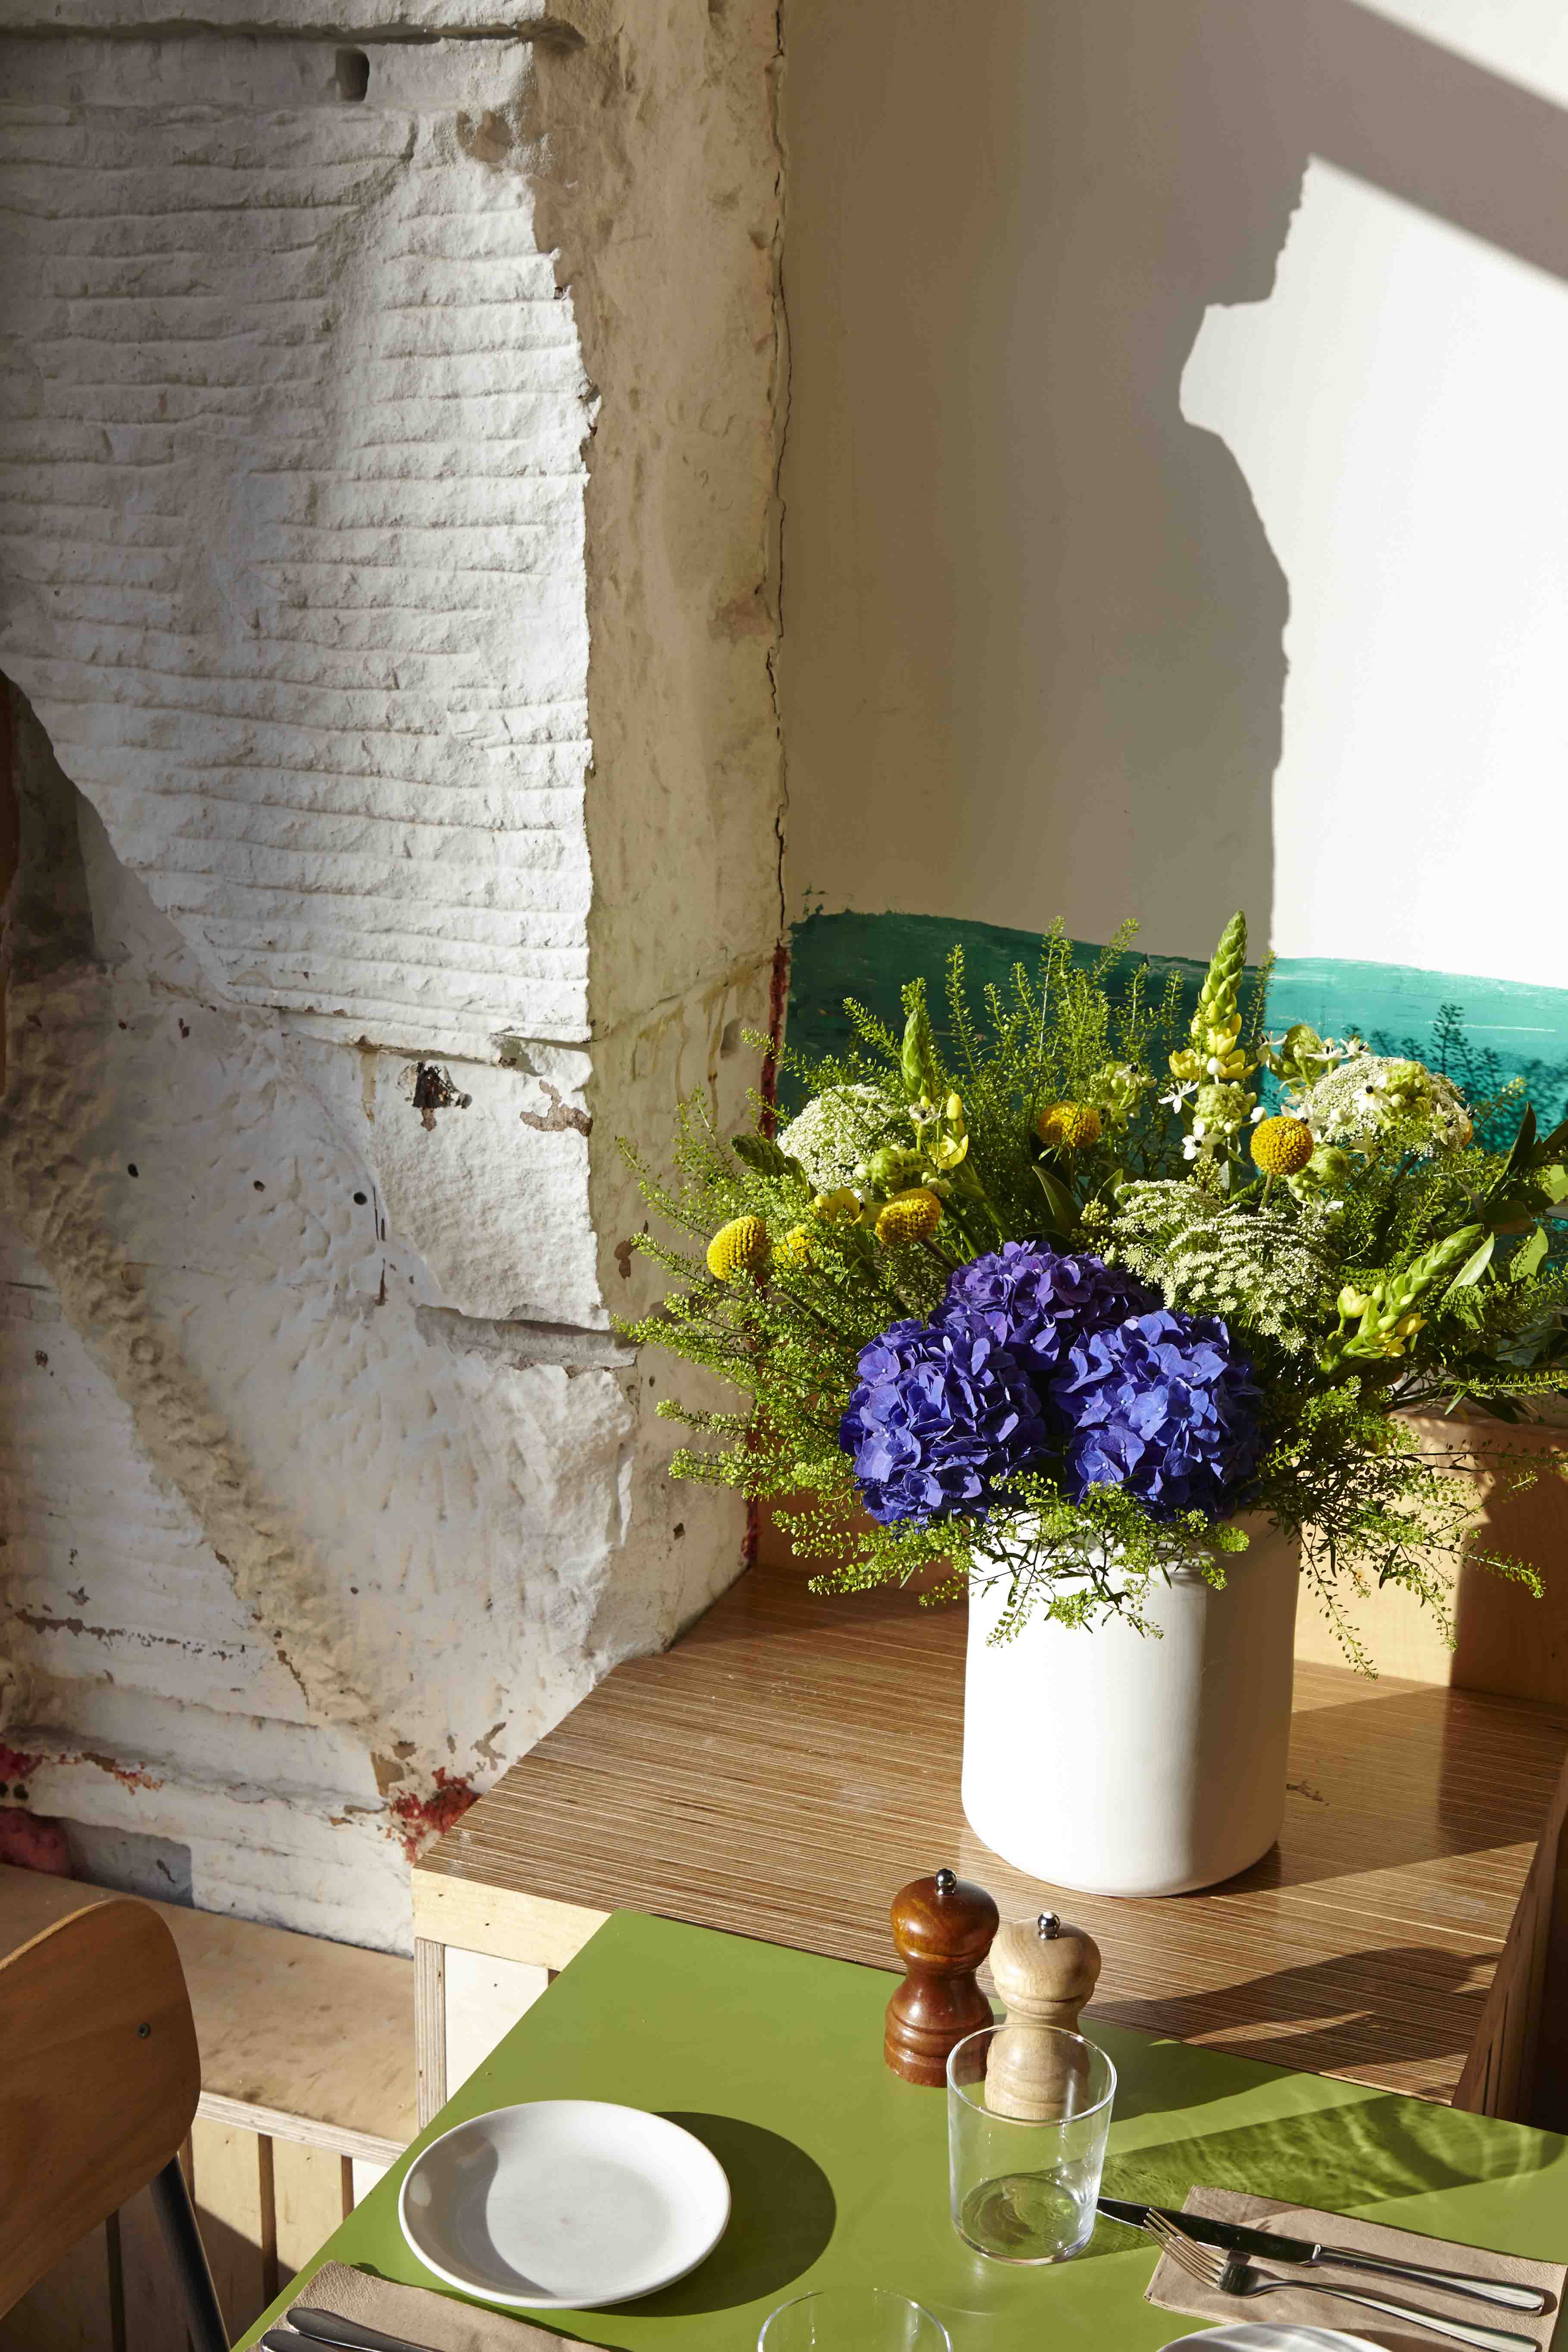 Wooden shelf with flowers in white vase in sunlight.